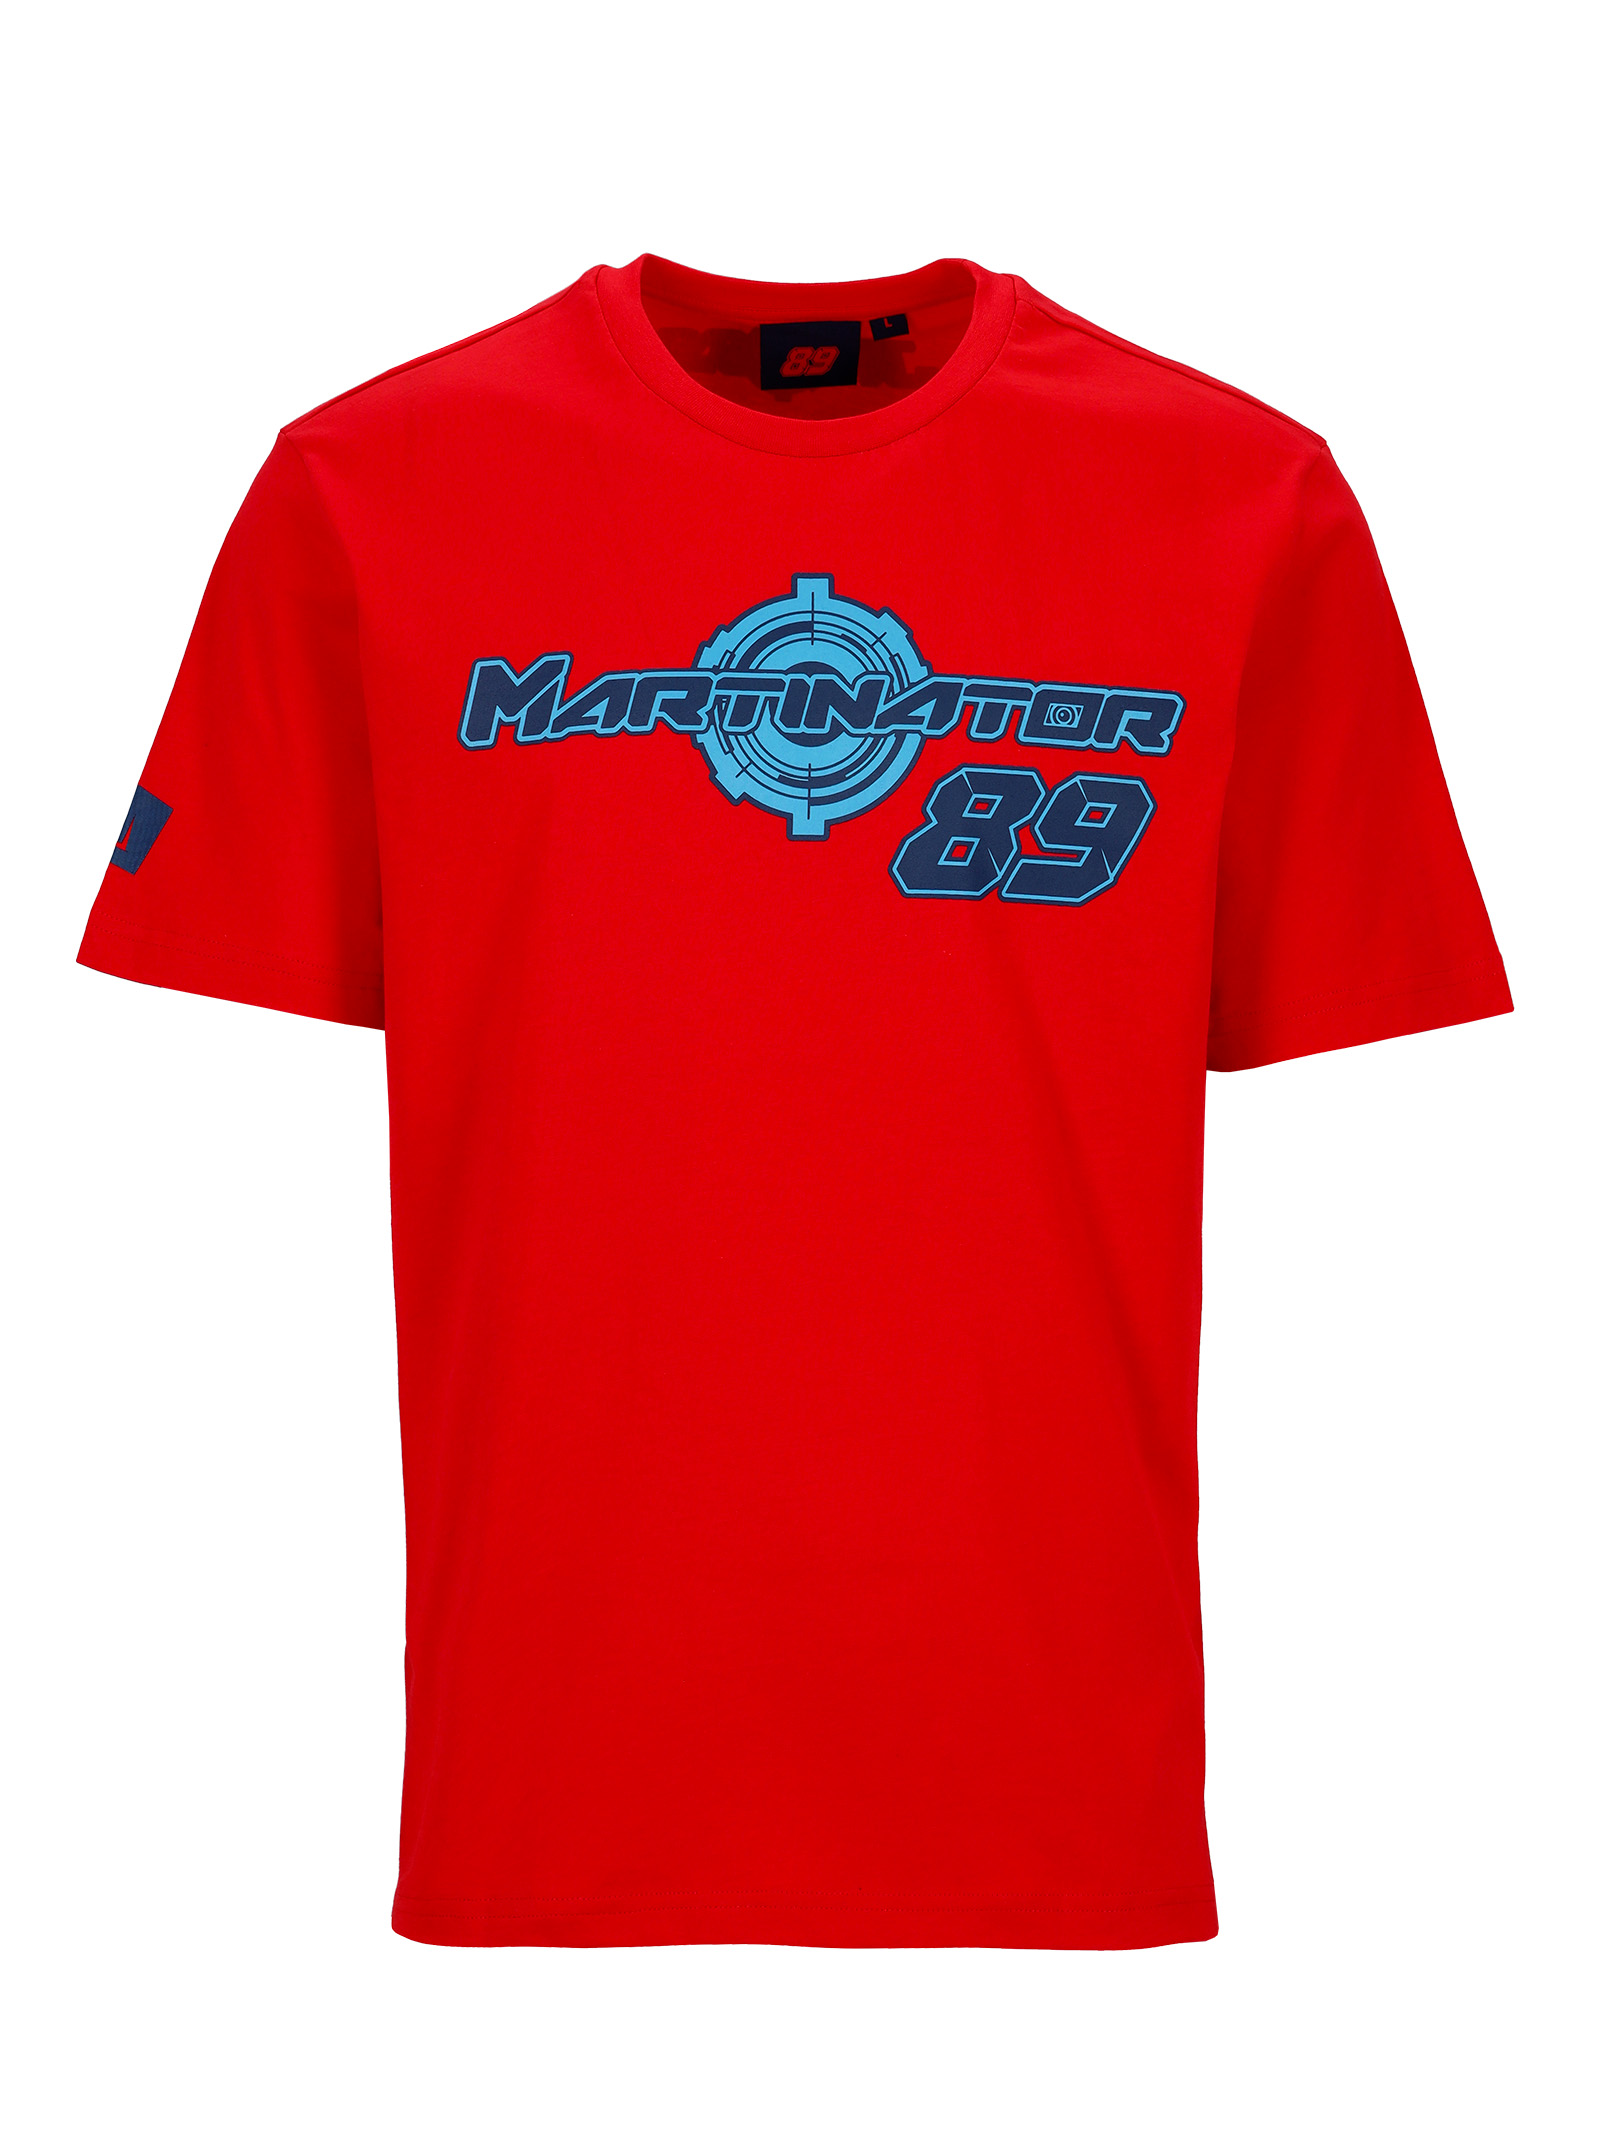 T-shirt Jorge Martin 89 Martinator rouge